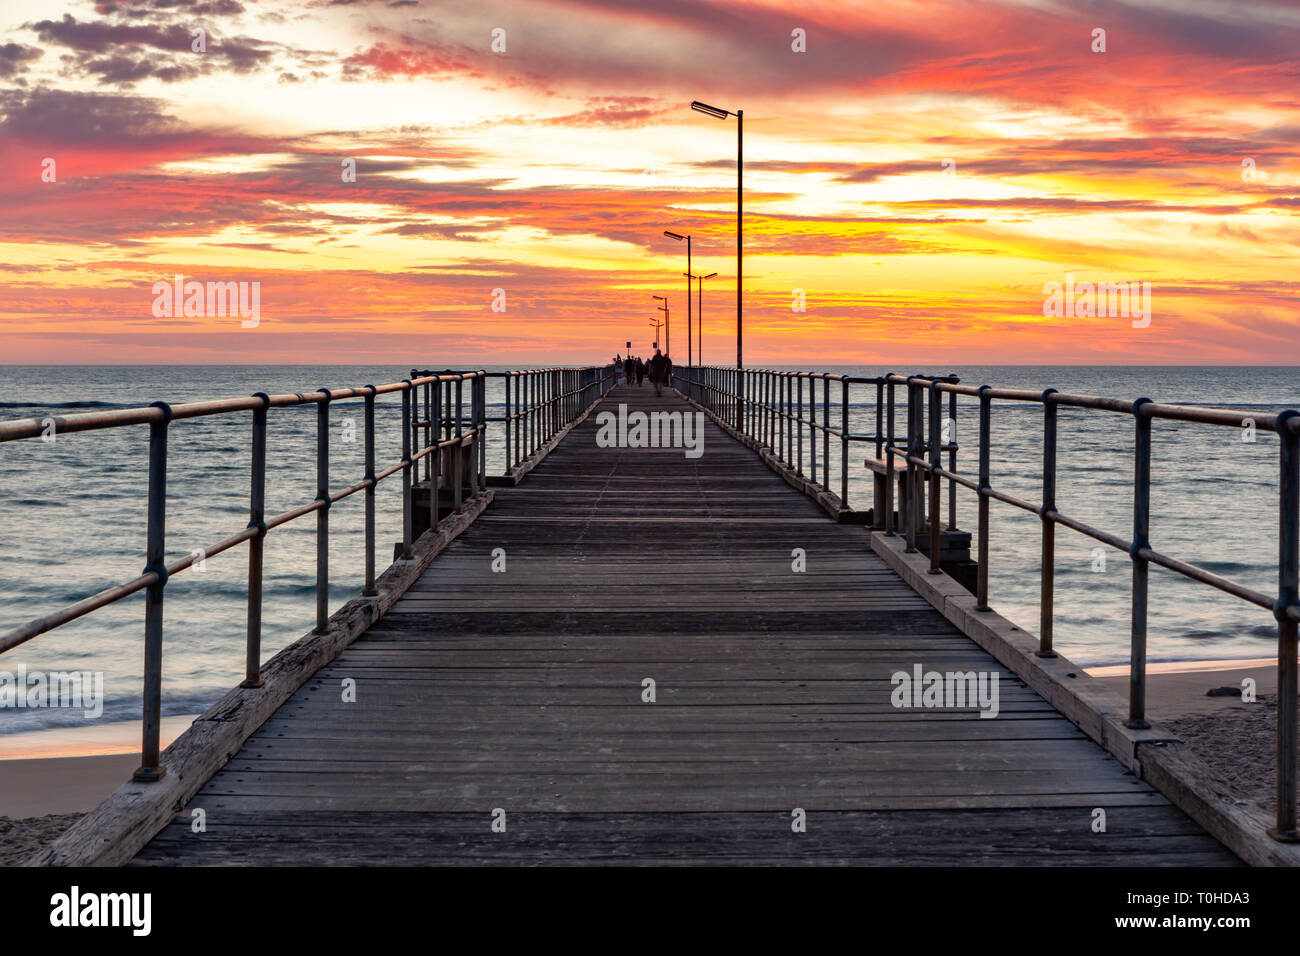 A beautiful sunset at Port Noarlunga on the jetty at Port Noarlunga South Australia Stock Photo